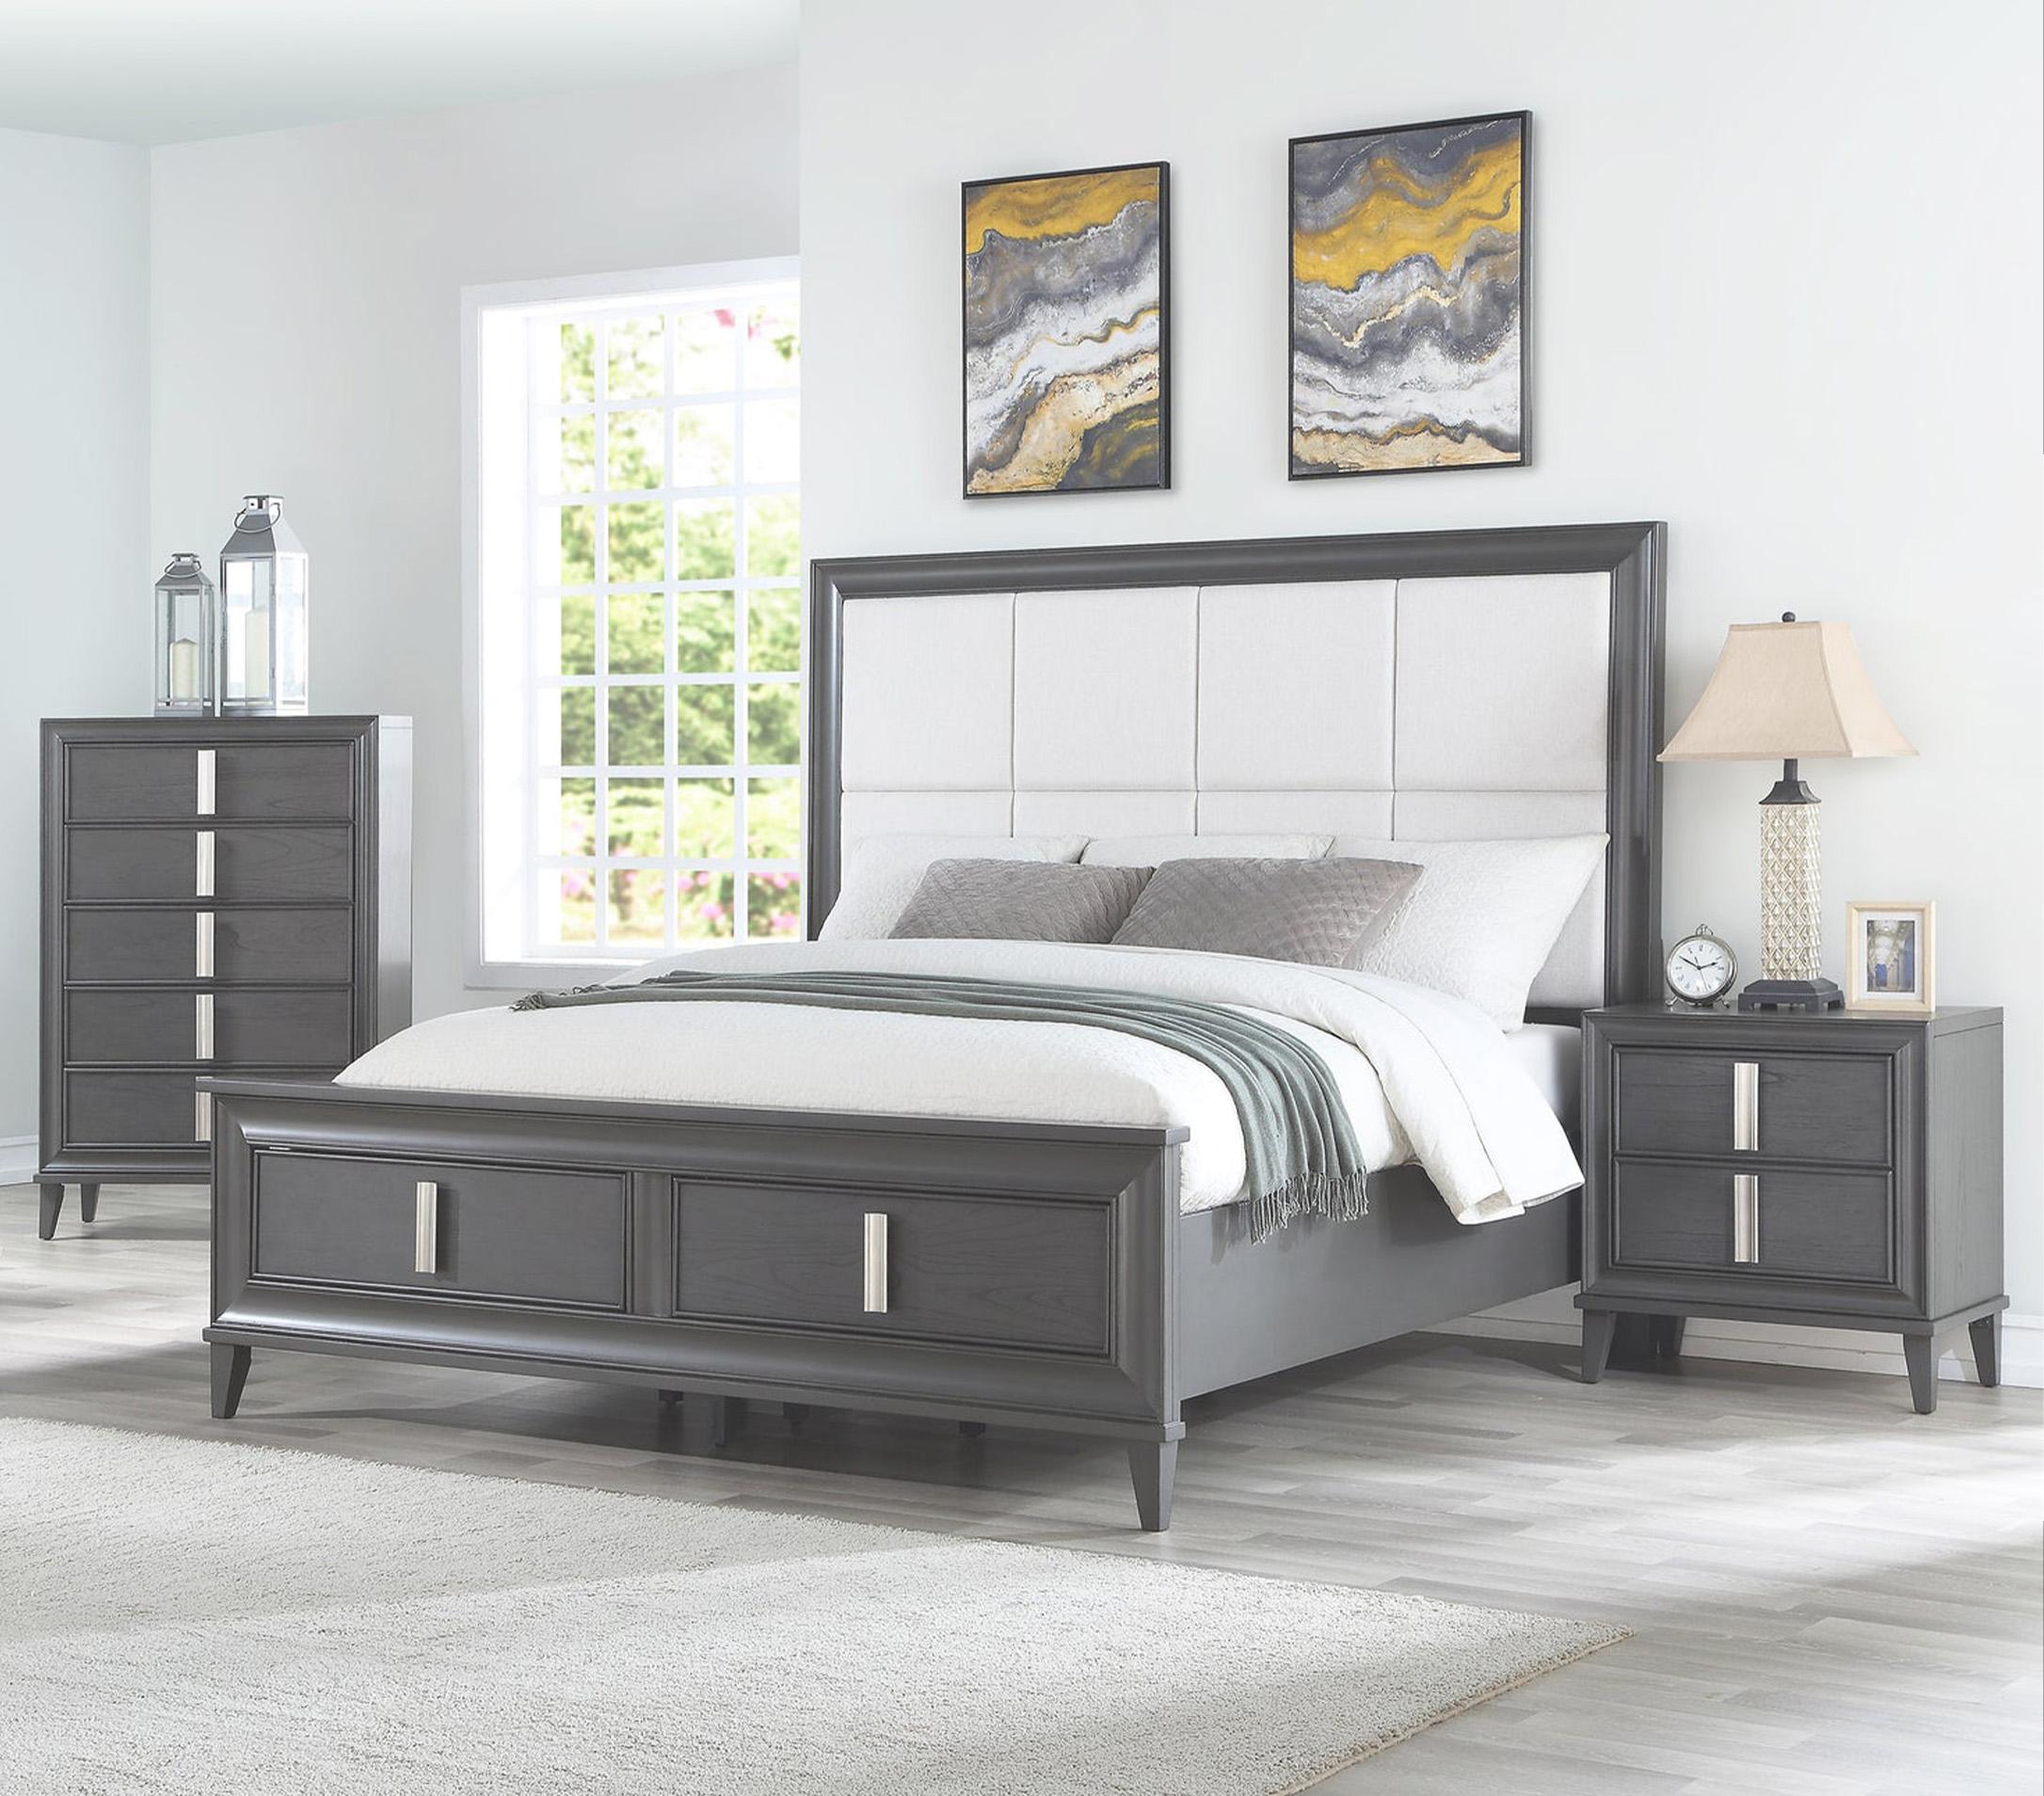 Contemporary, Modern Storage Bedroom Set LORRAINE 8171-07EK-Set-3 in Dark Gray, Cream Fabric